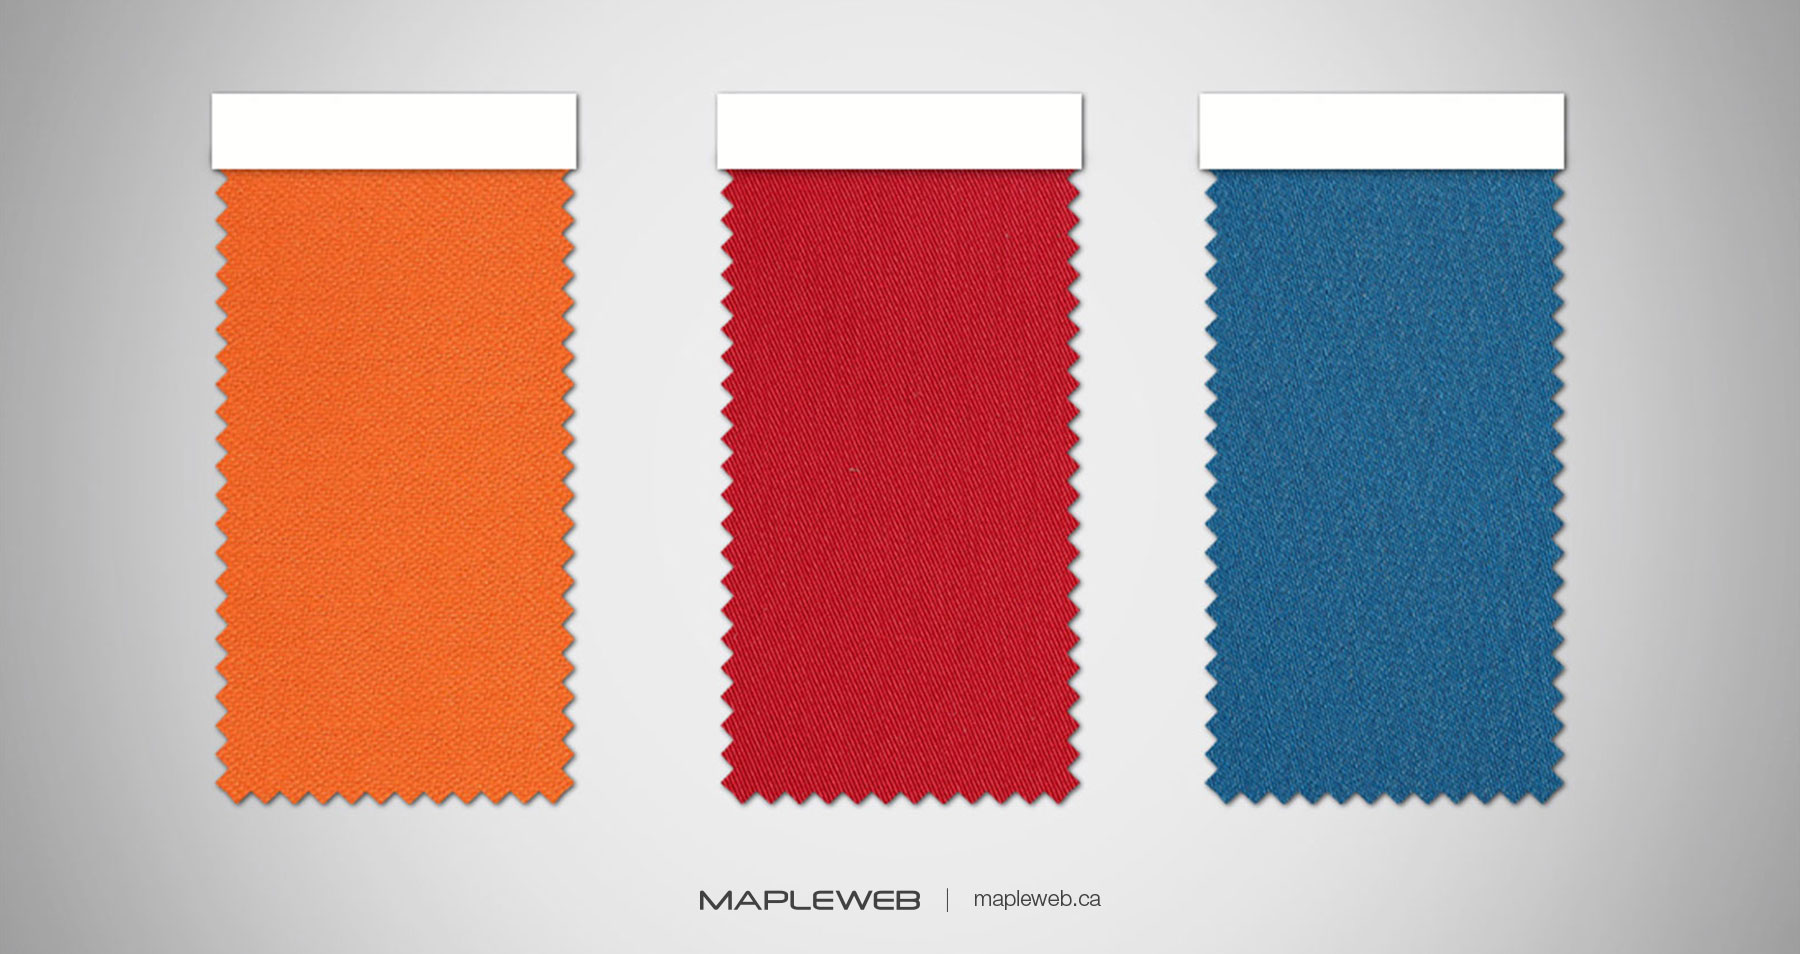 Daletec Brand design by Mapleweb Sample of Orange Red and Dark Blue